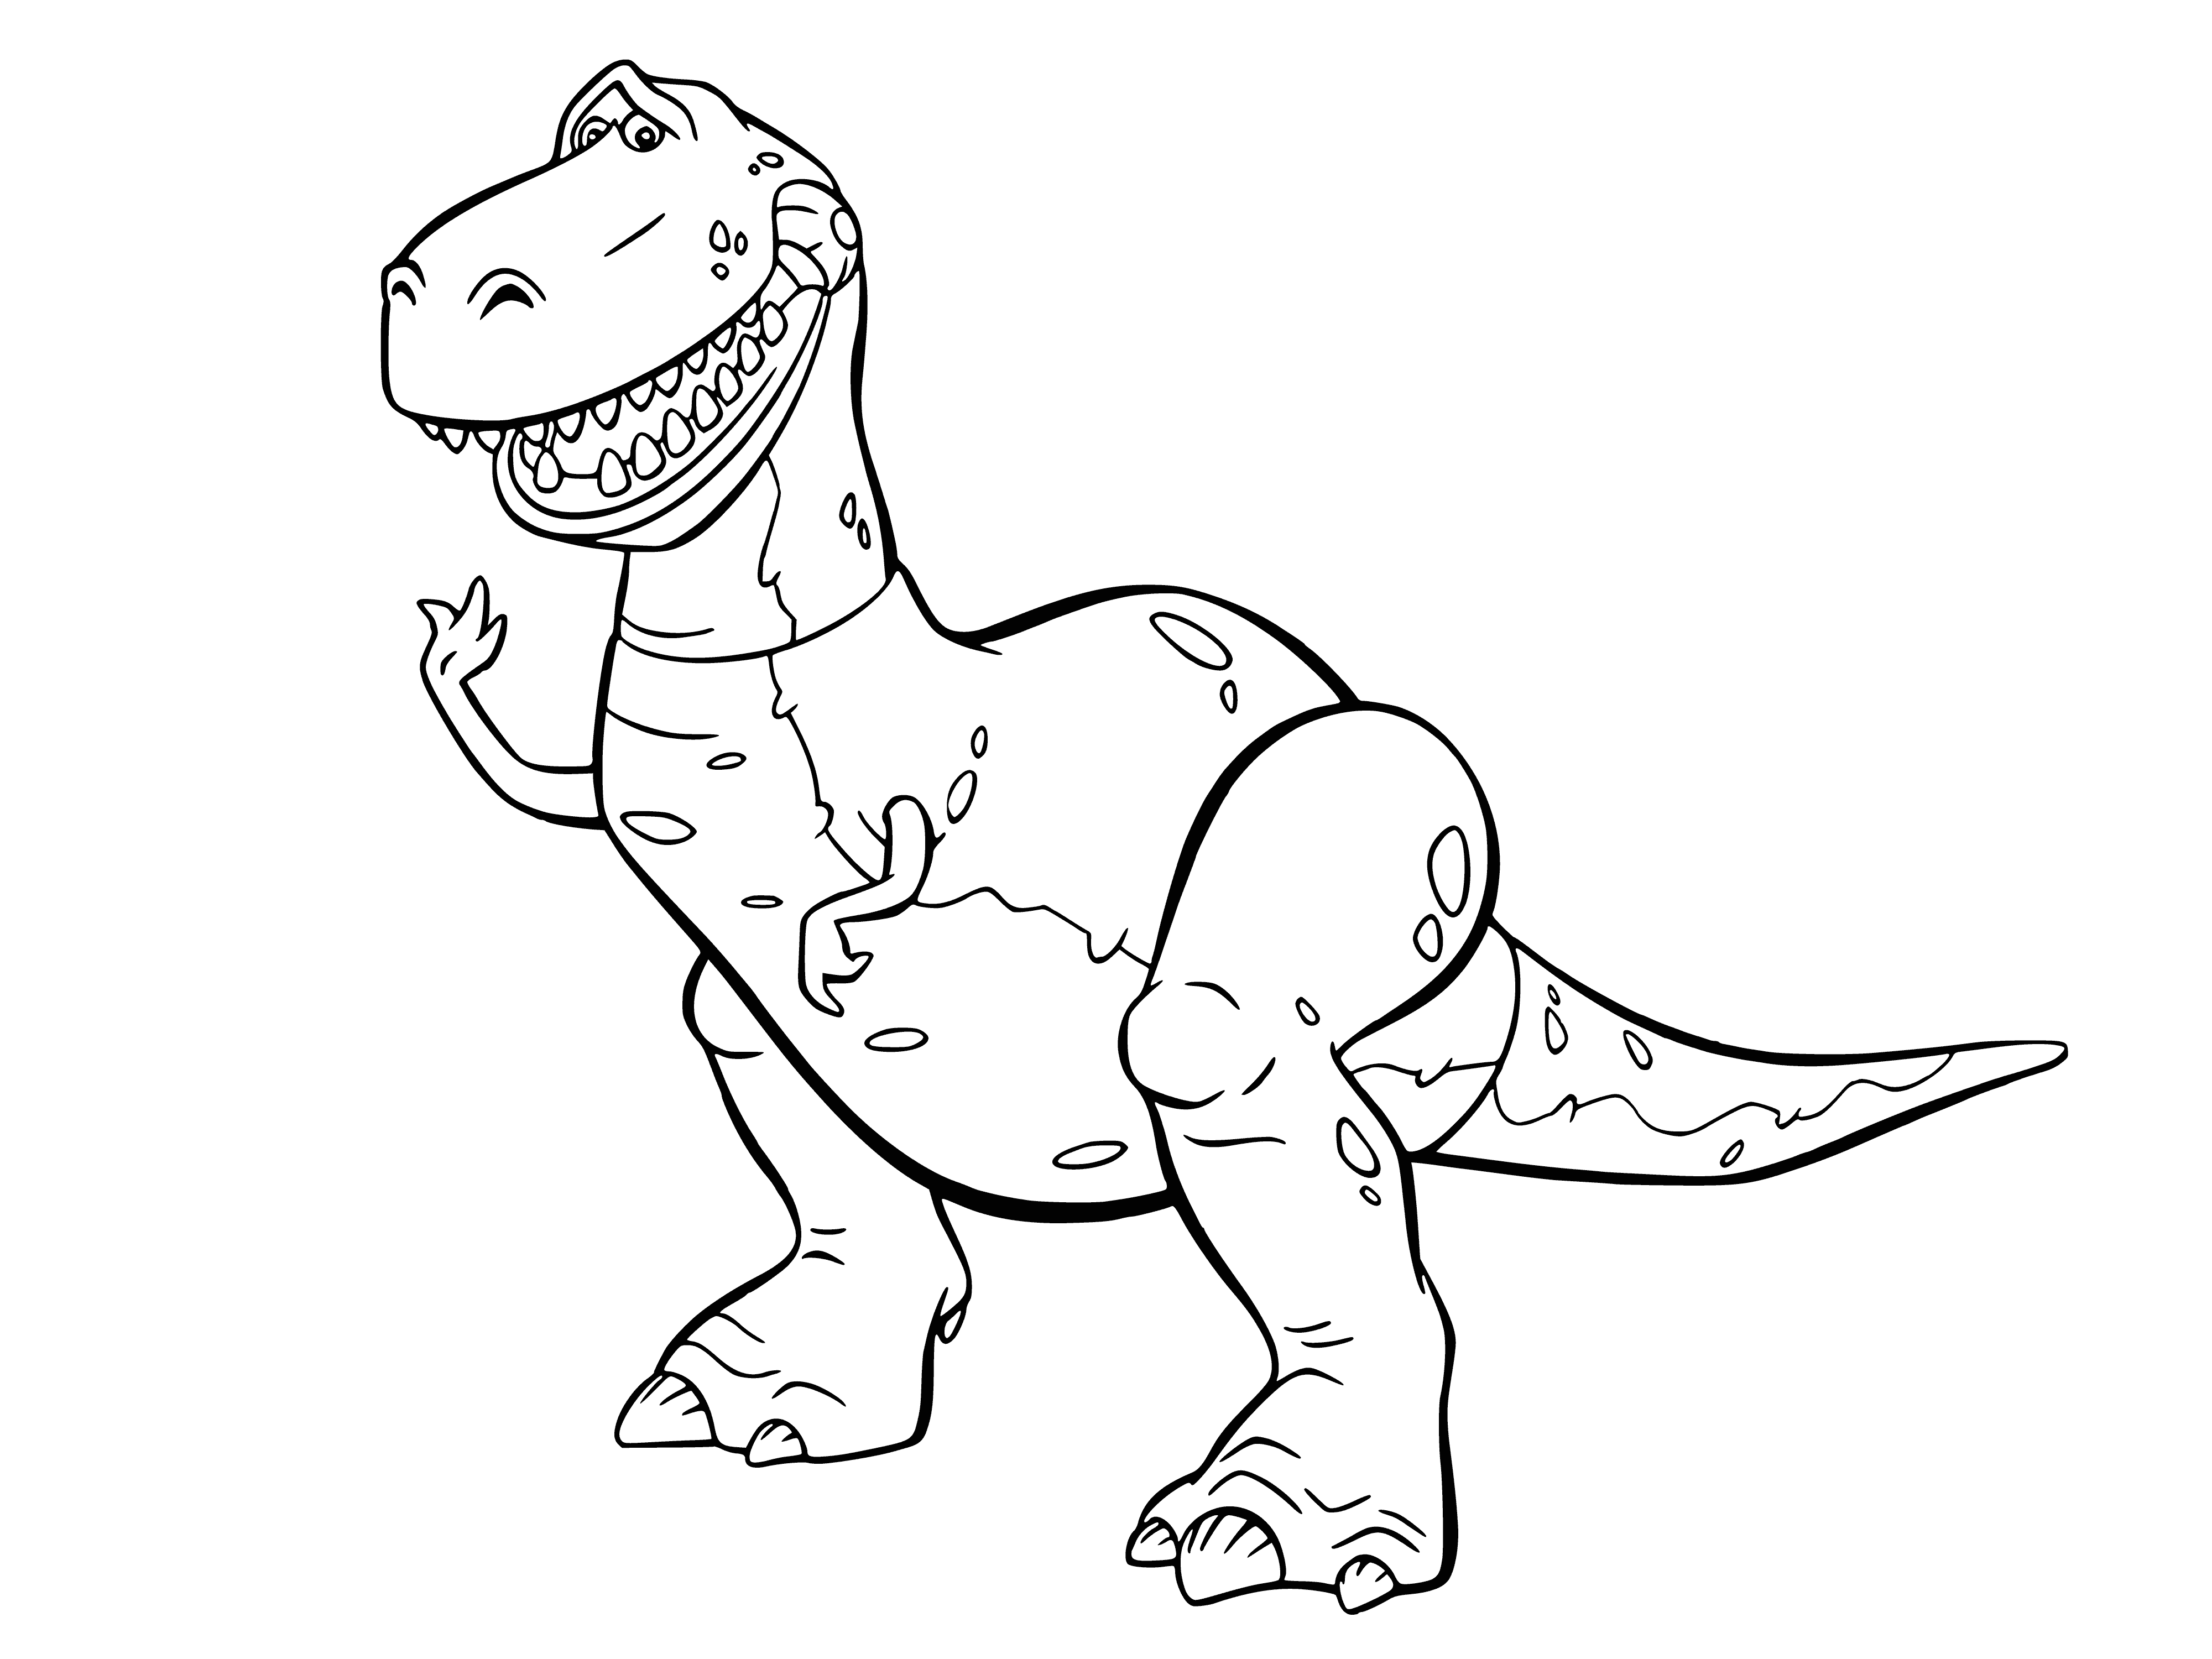 Dinosaur Rex coloring page